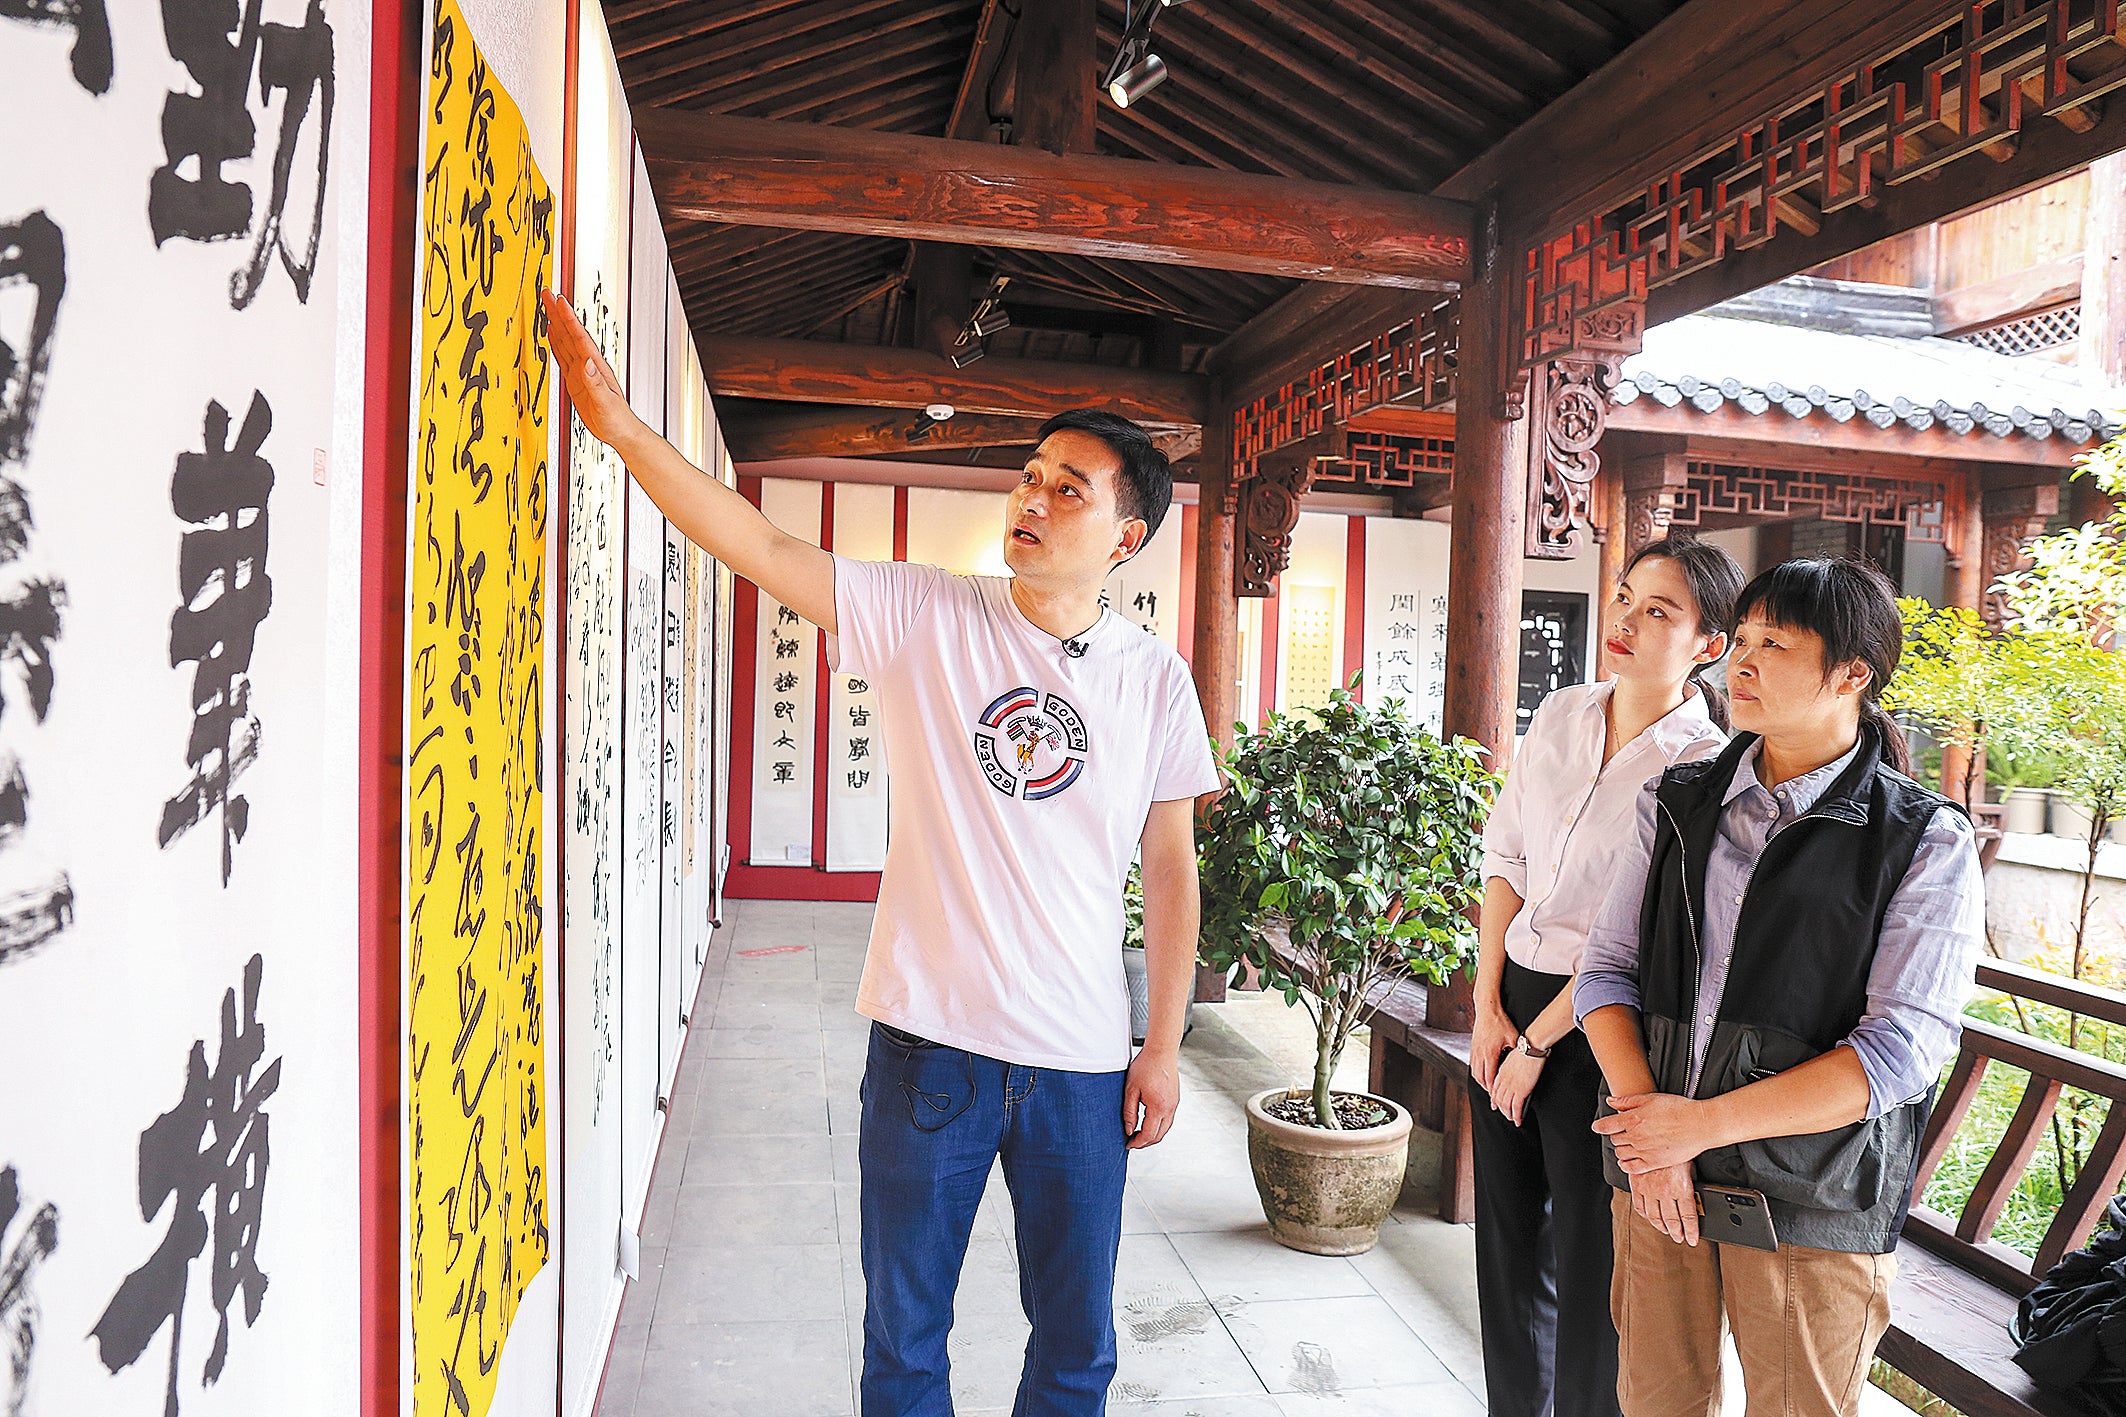 Visitors discuss calligraphy in Nanshan village in Hangzhou